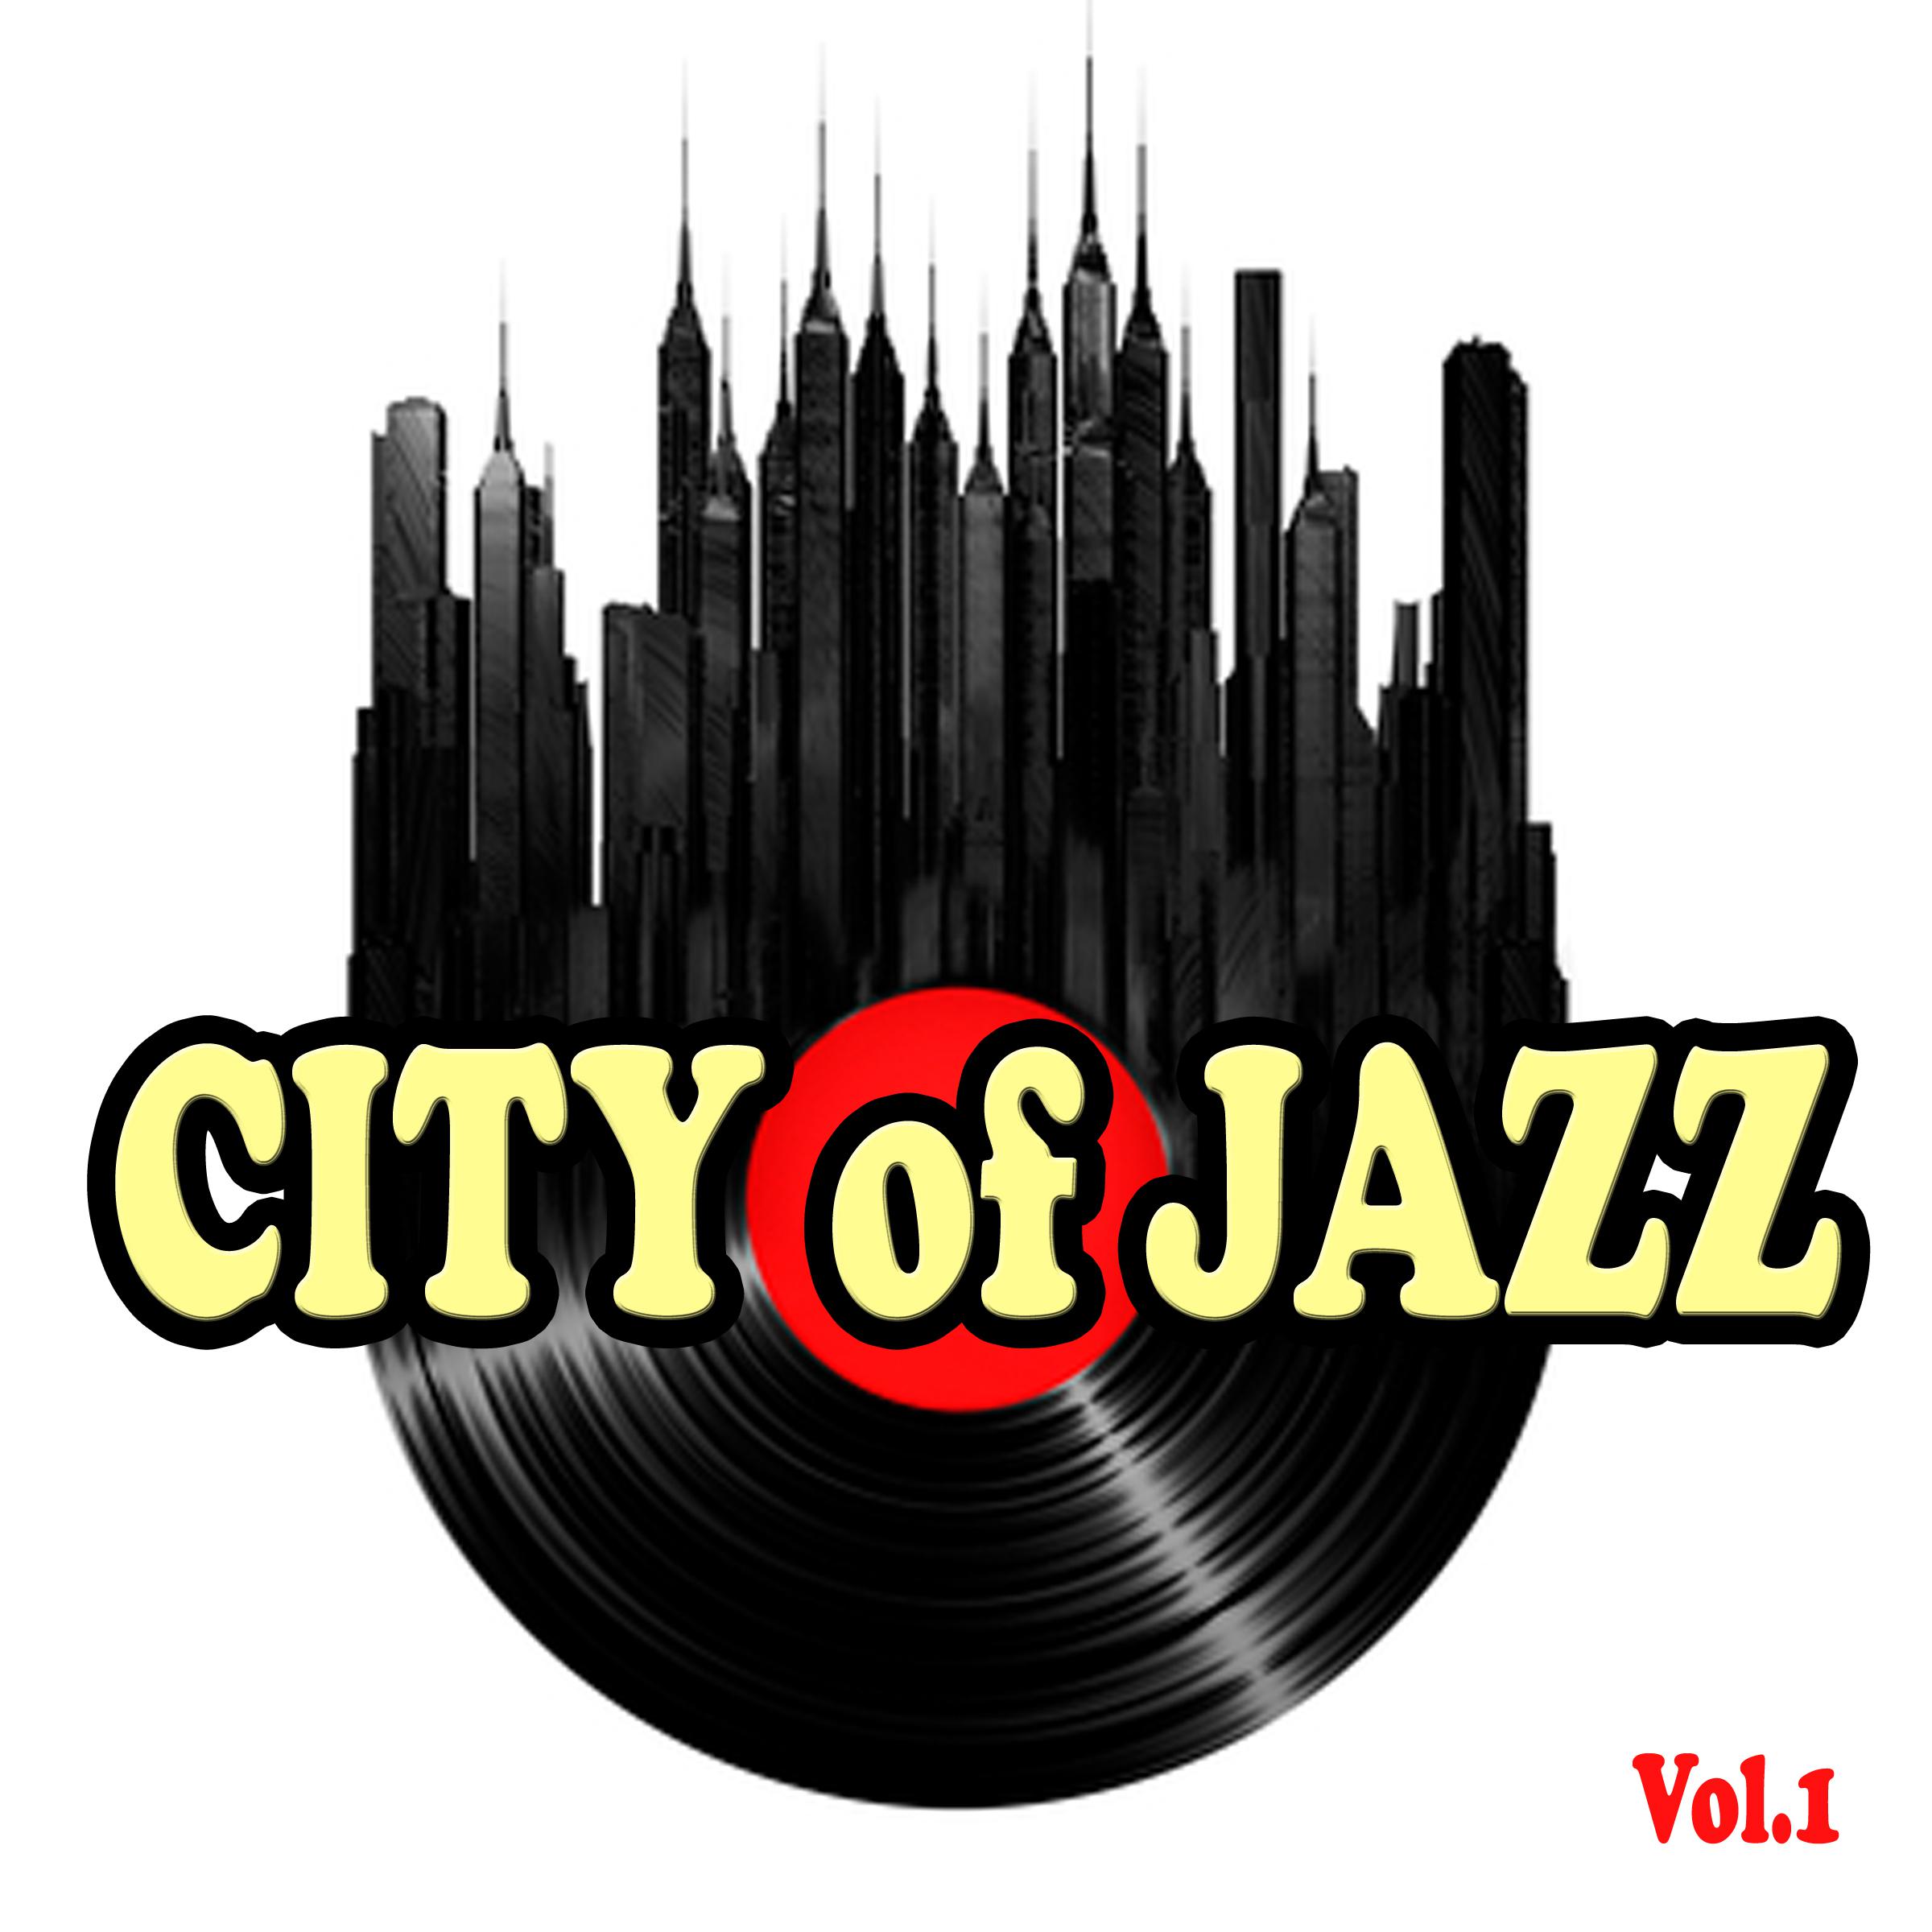 City of Jazz, Vol. 1